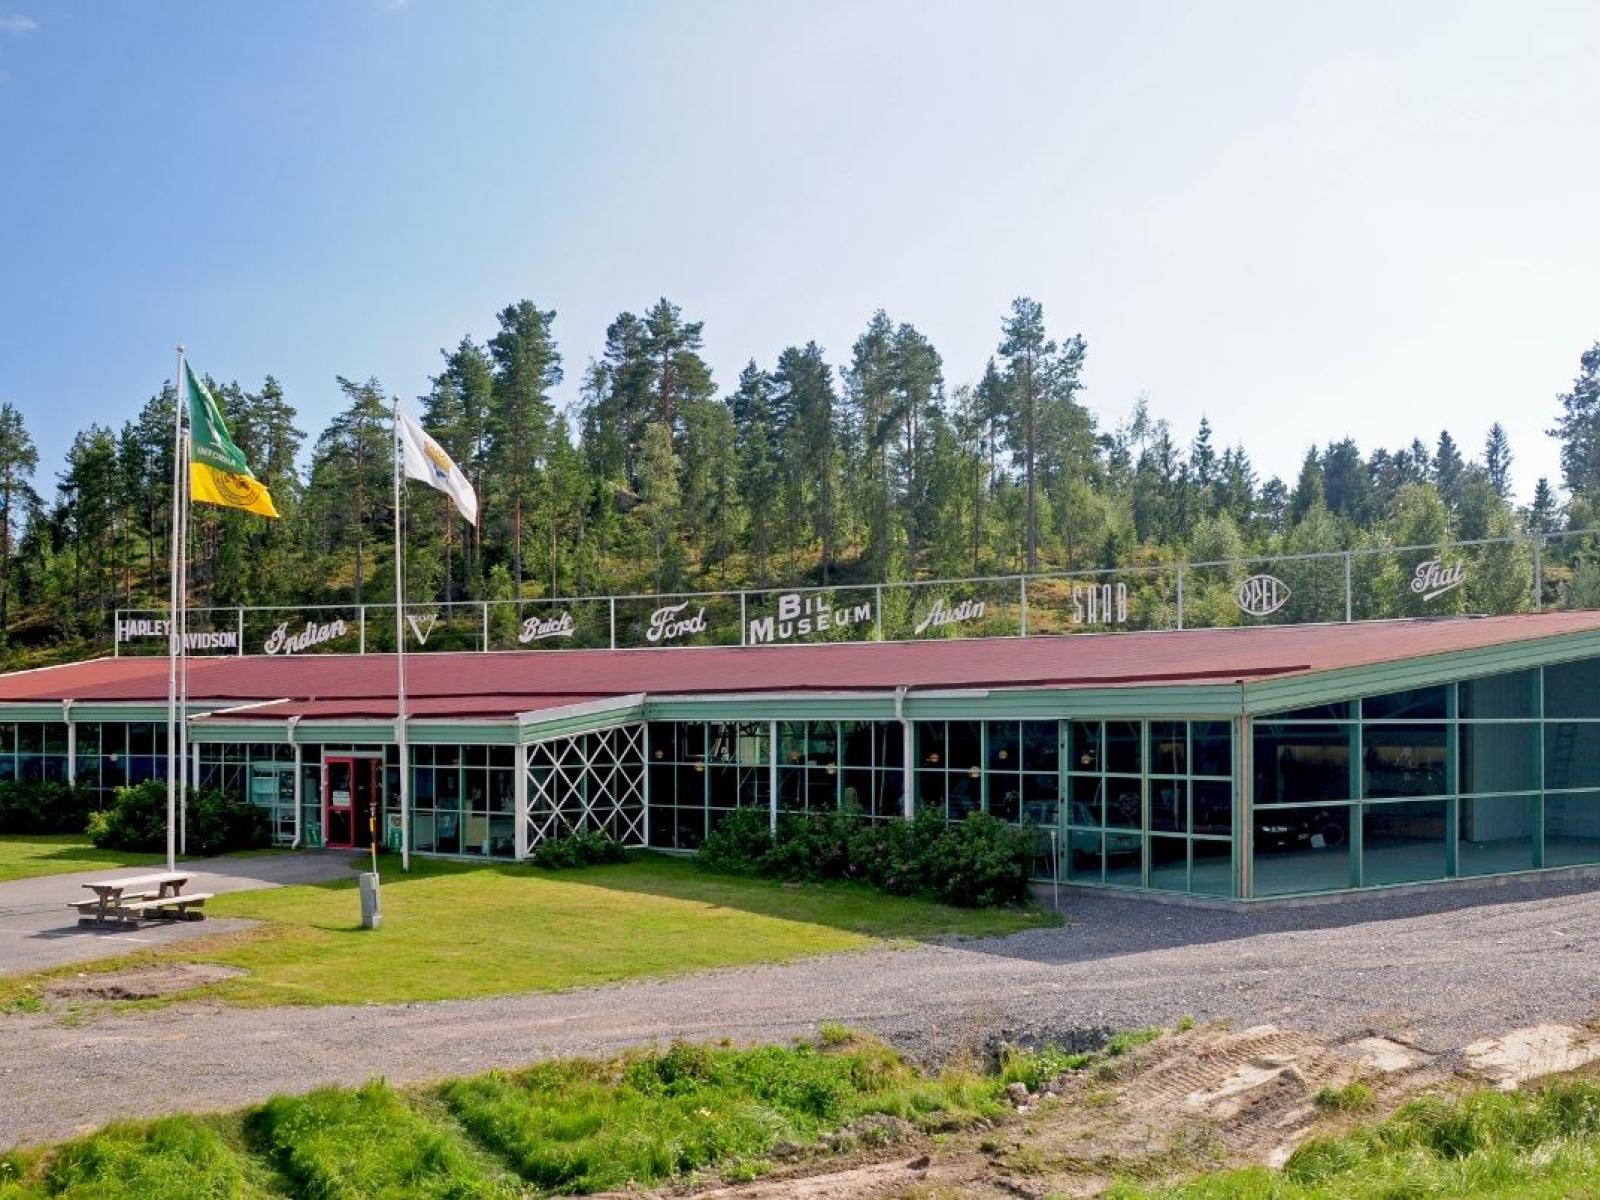 Ådalens classic car museum